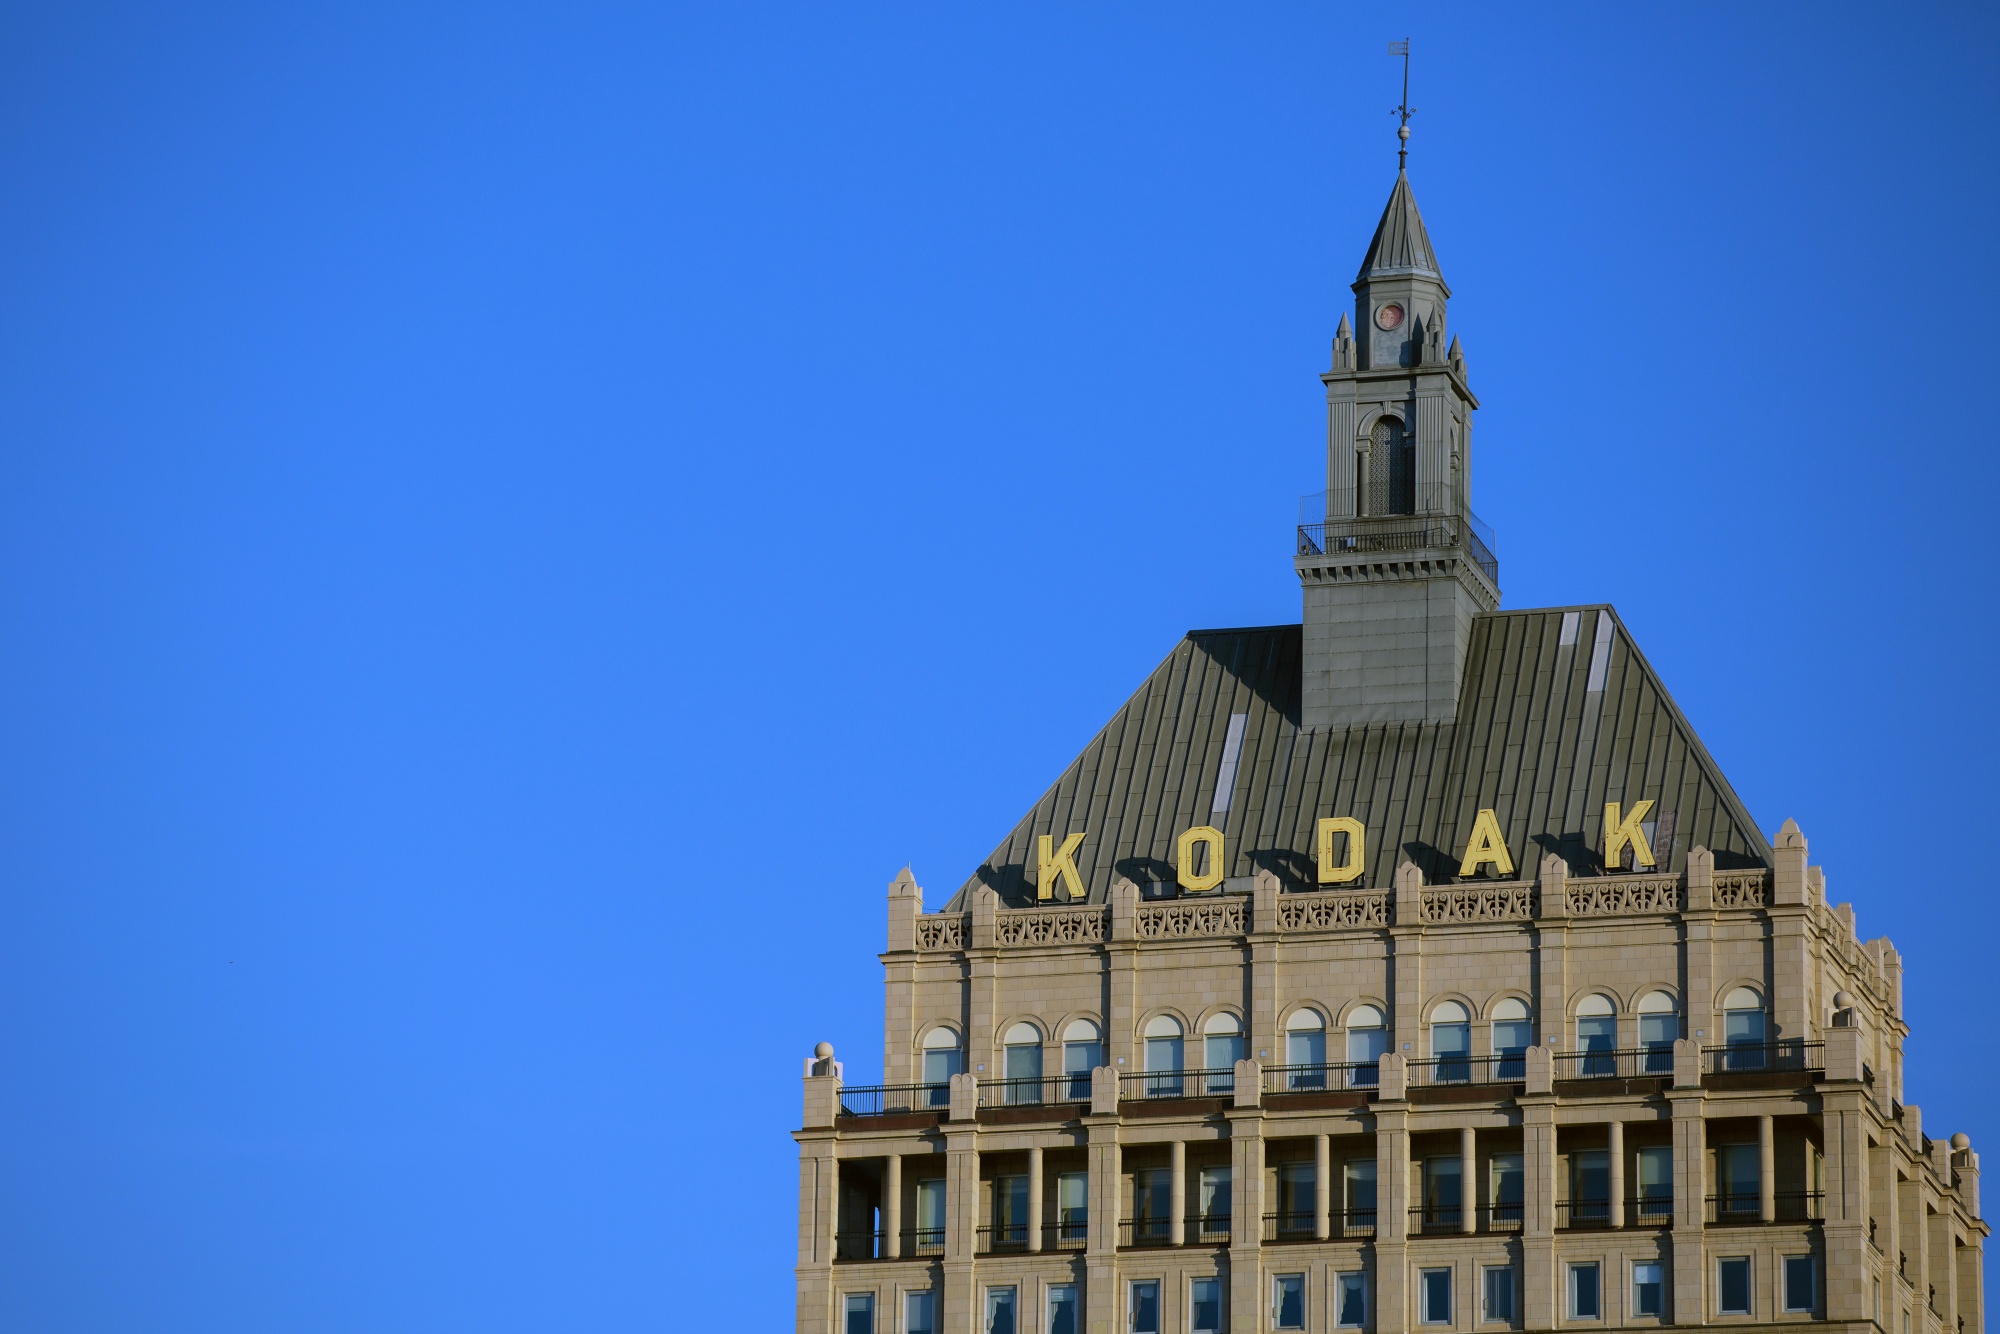 The Kodak Tower at the Eastman Kodak Co. headquarters complex in Rochester, New York.